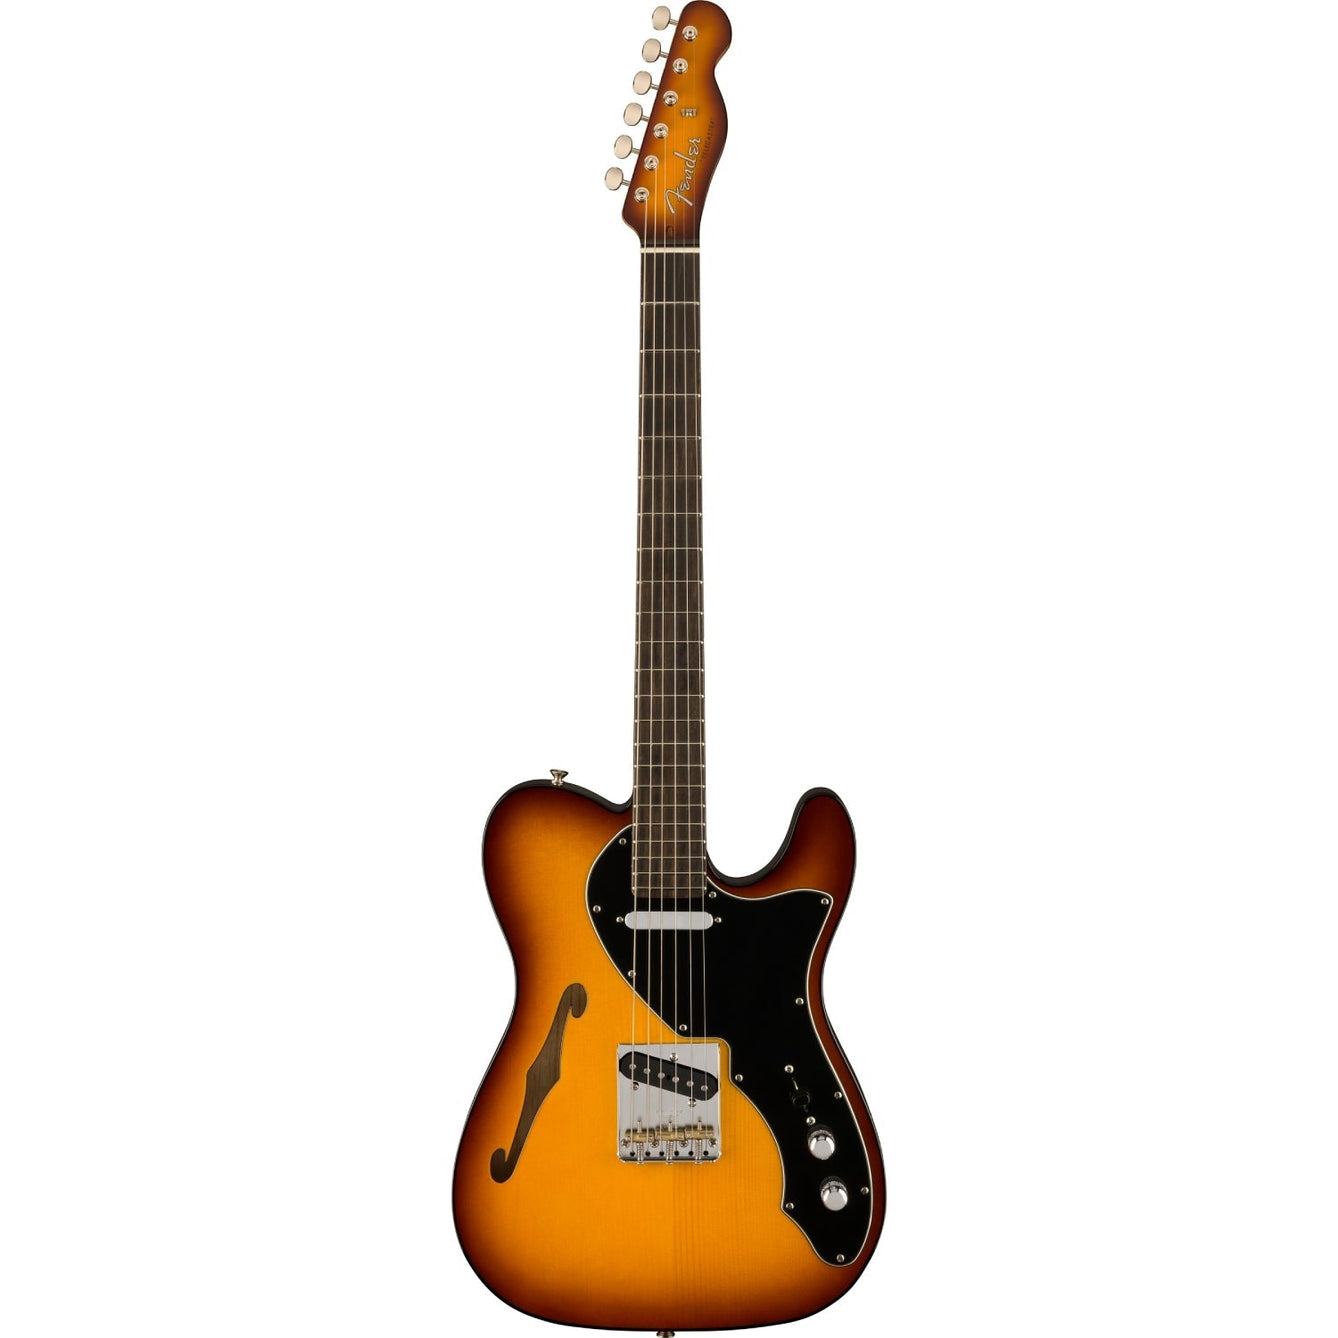 Đàn Guitar Điện Fender Limited Edition Suona Telecaster Thinline-Mai Nguyên Music